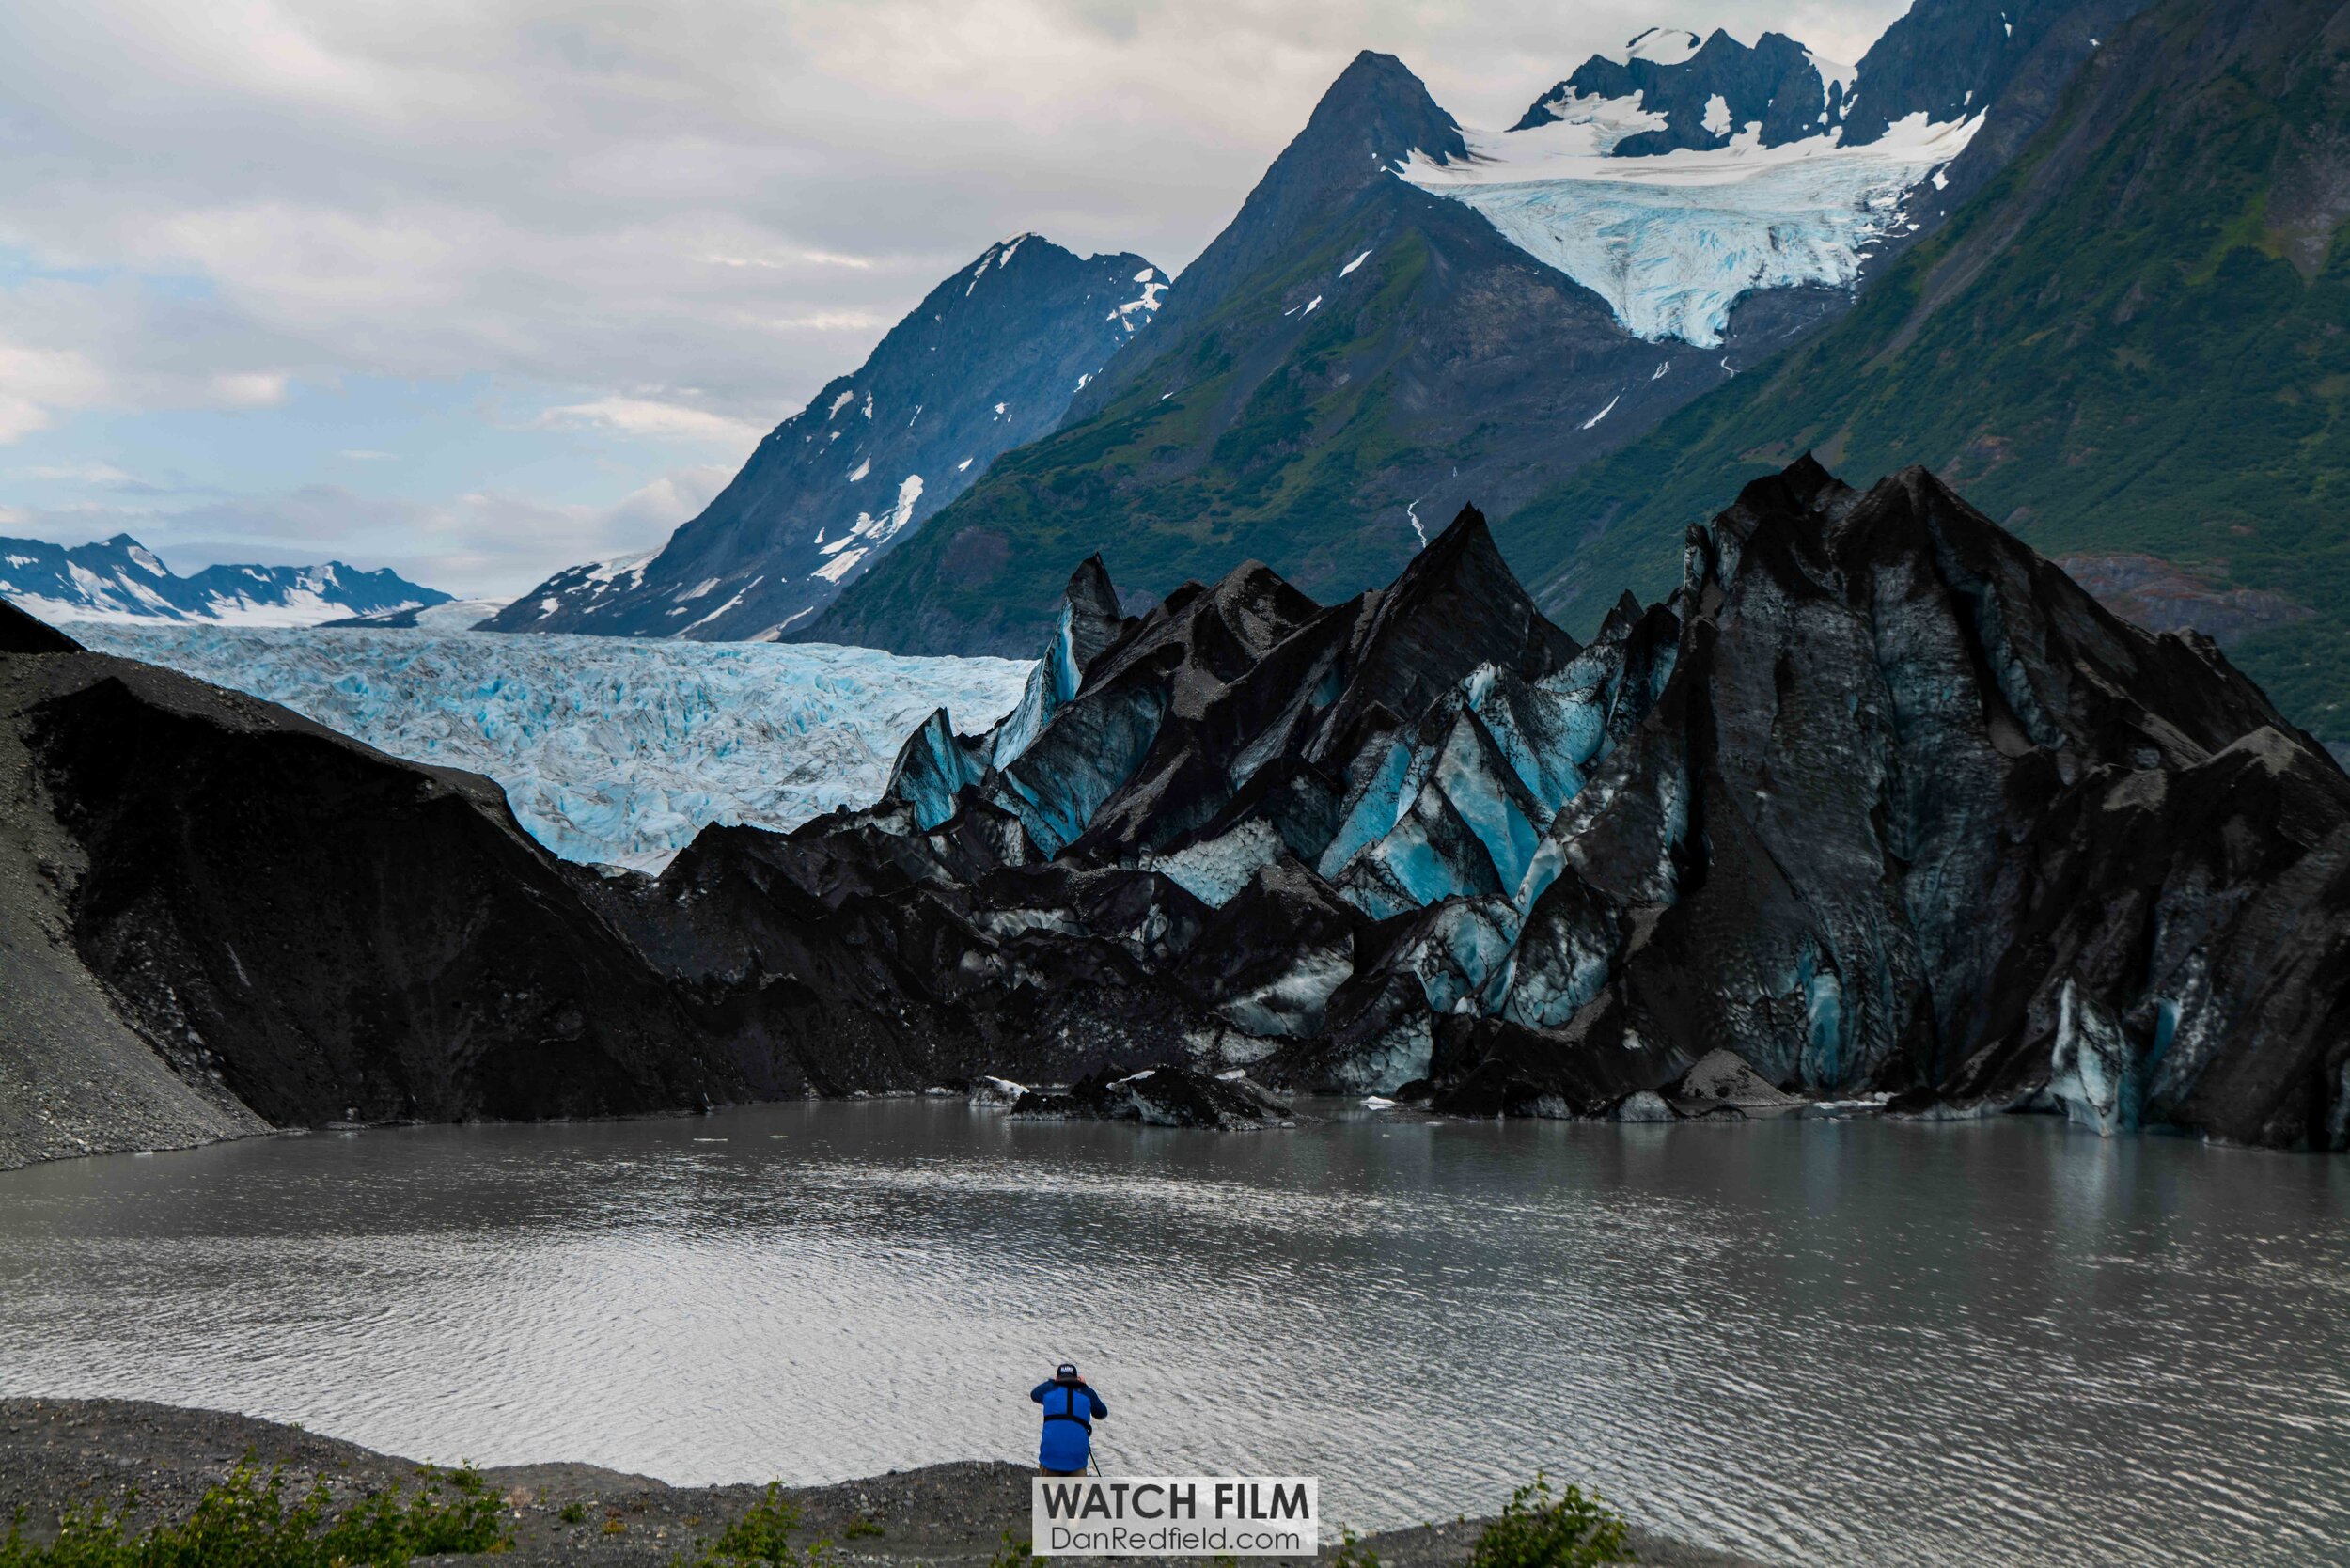 dan redfield photographing spencer glacier.jpg